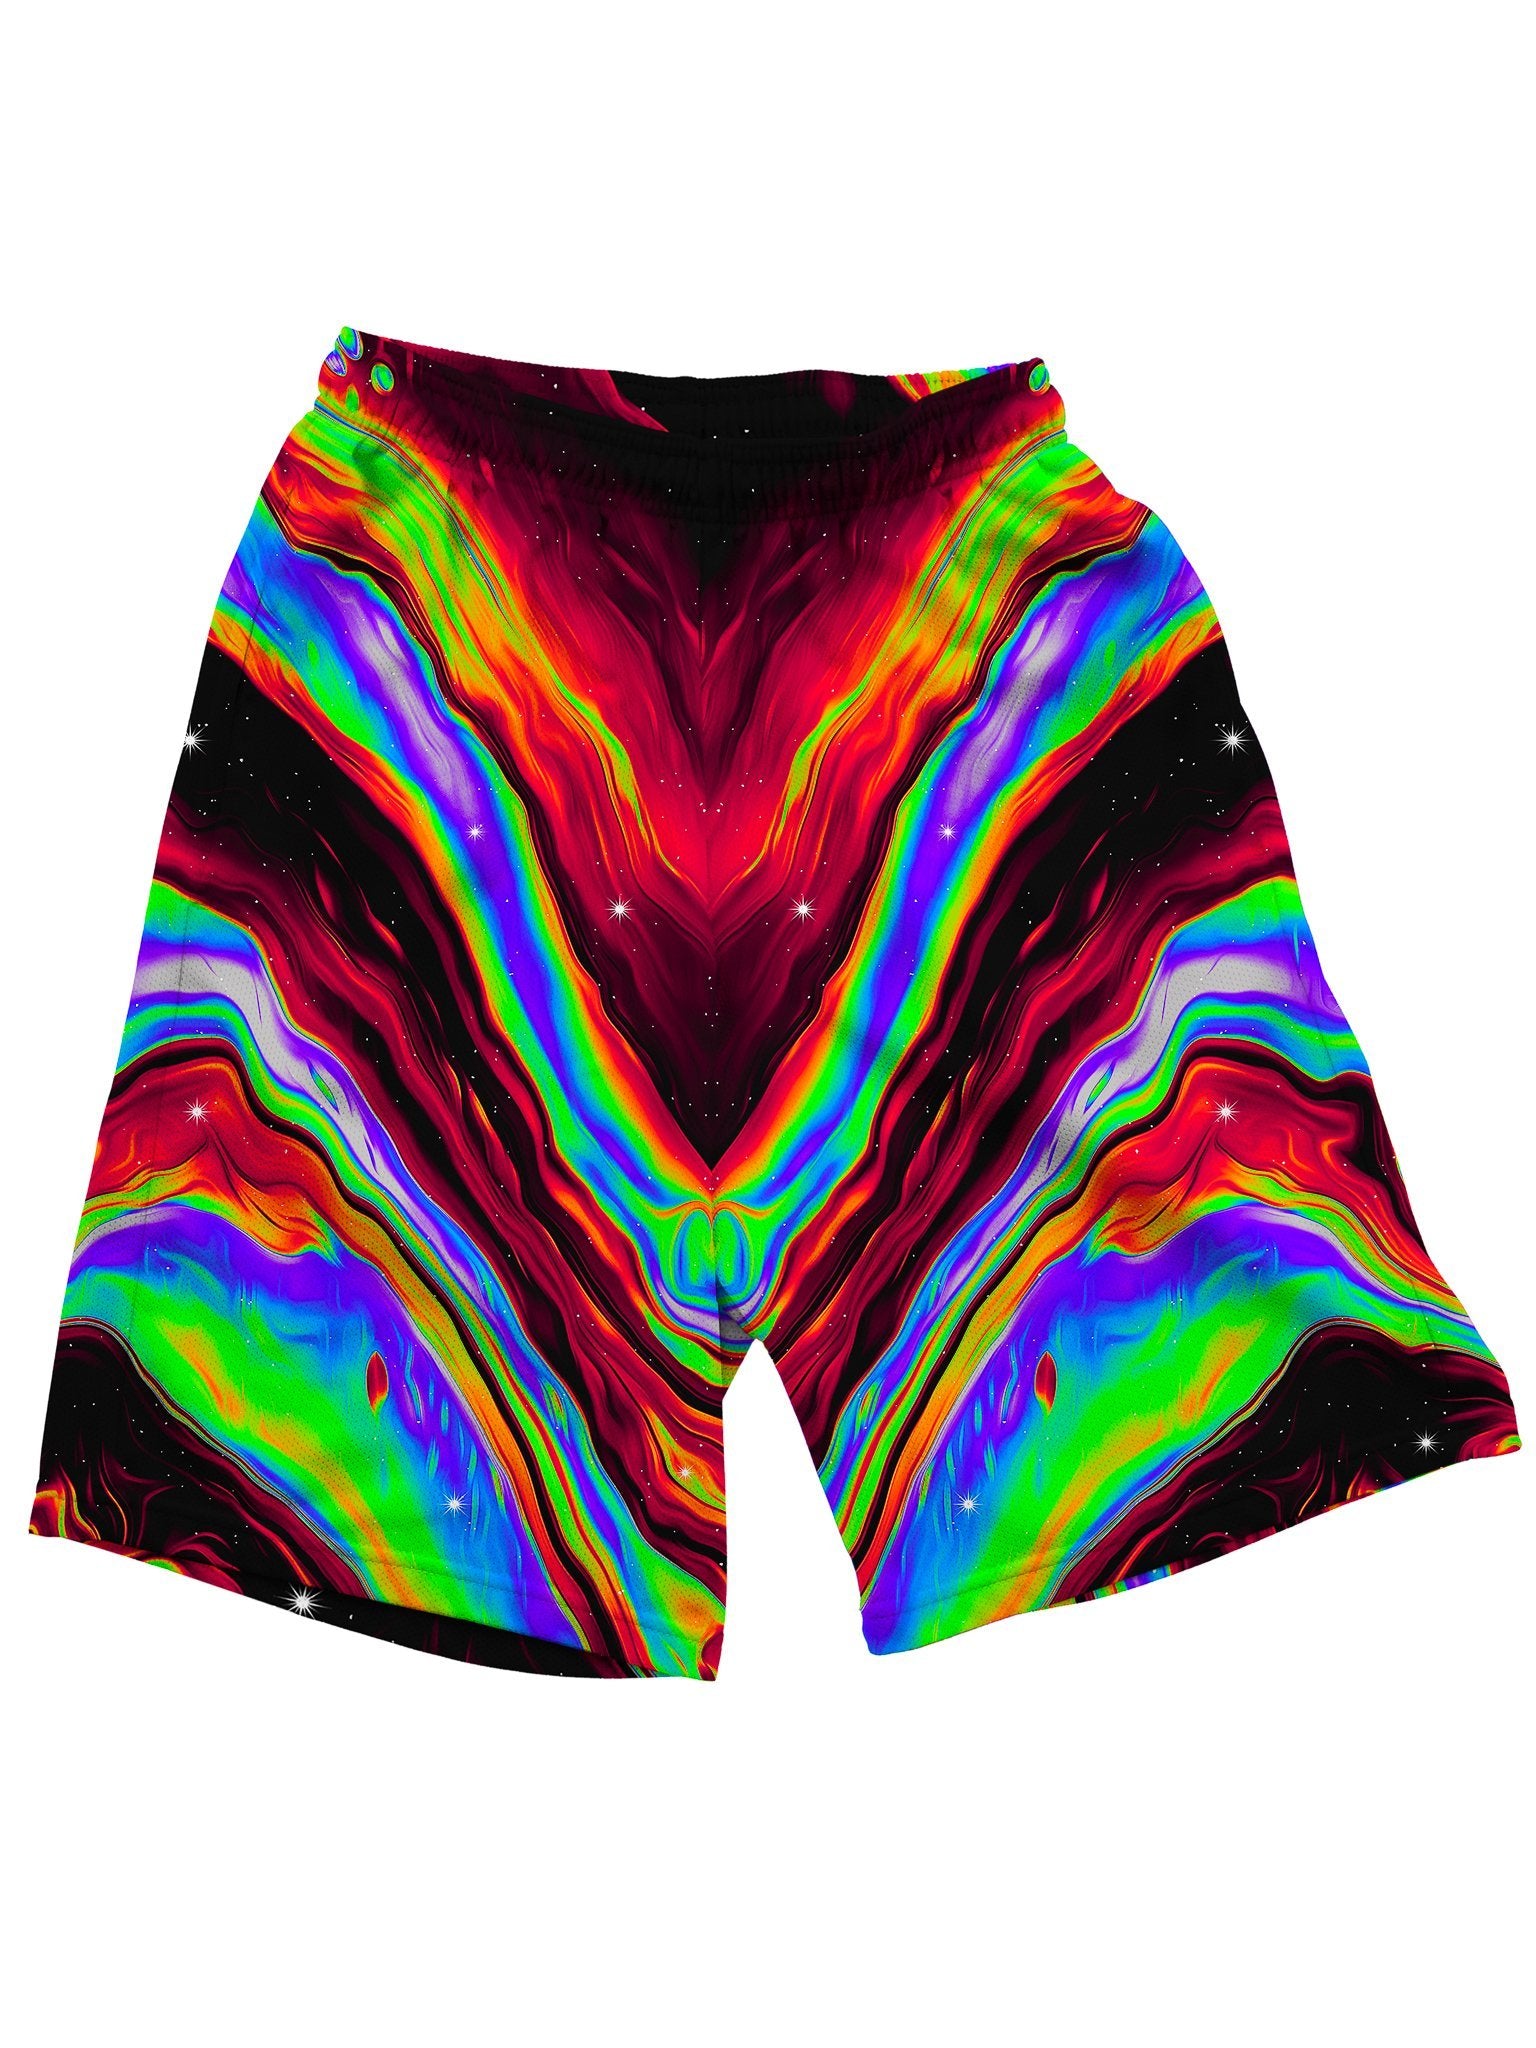 Neon Venus Fly Trap Shorts Mens Shorts Electro Threads 